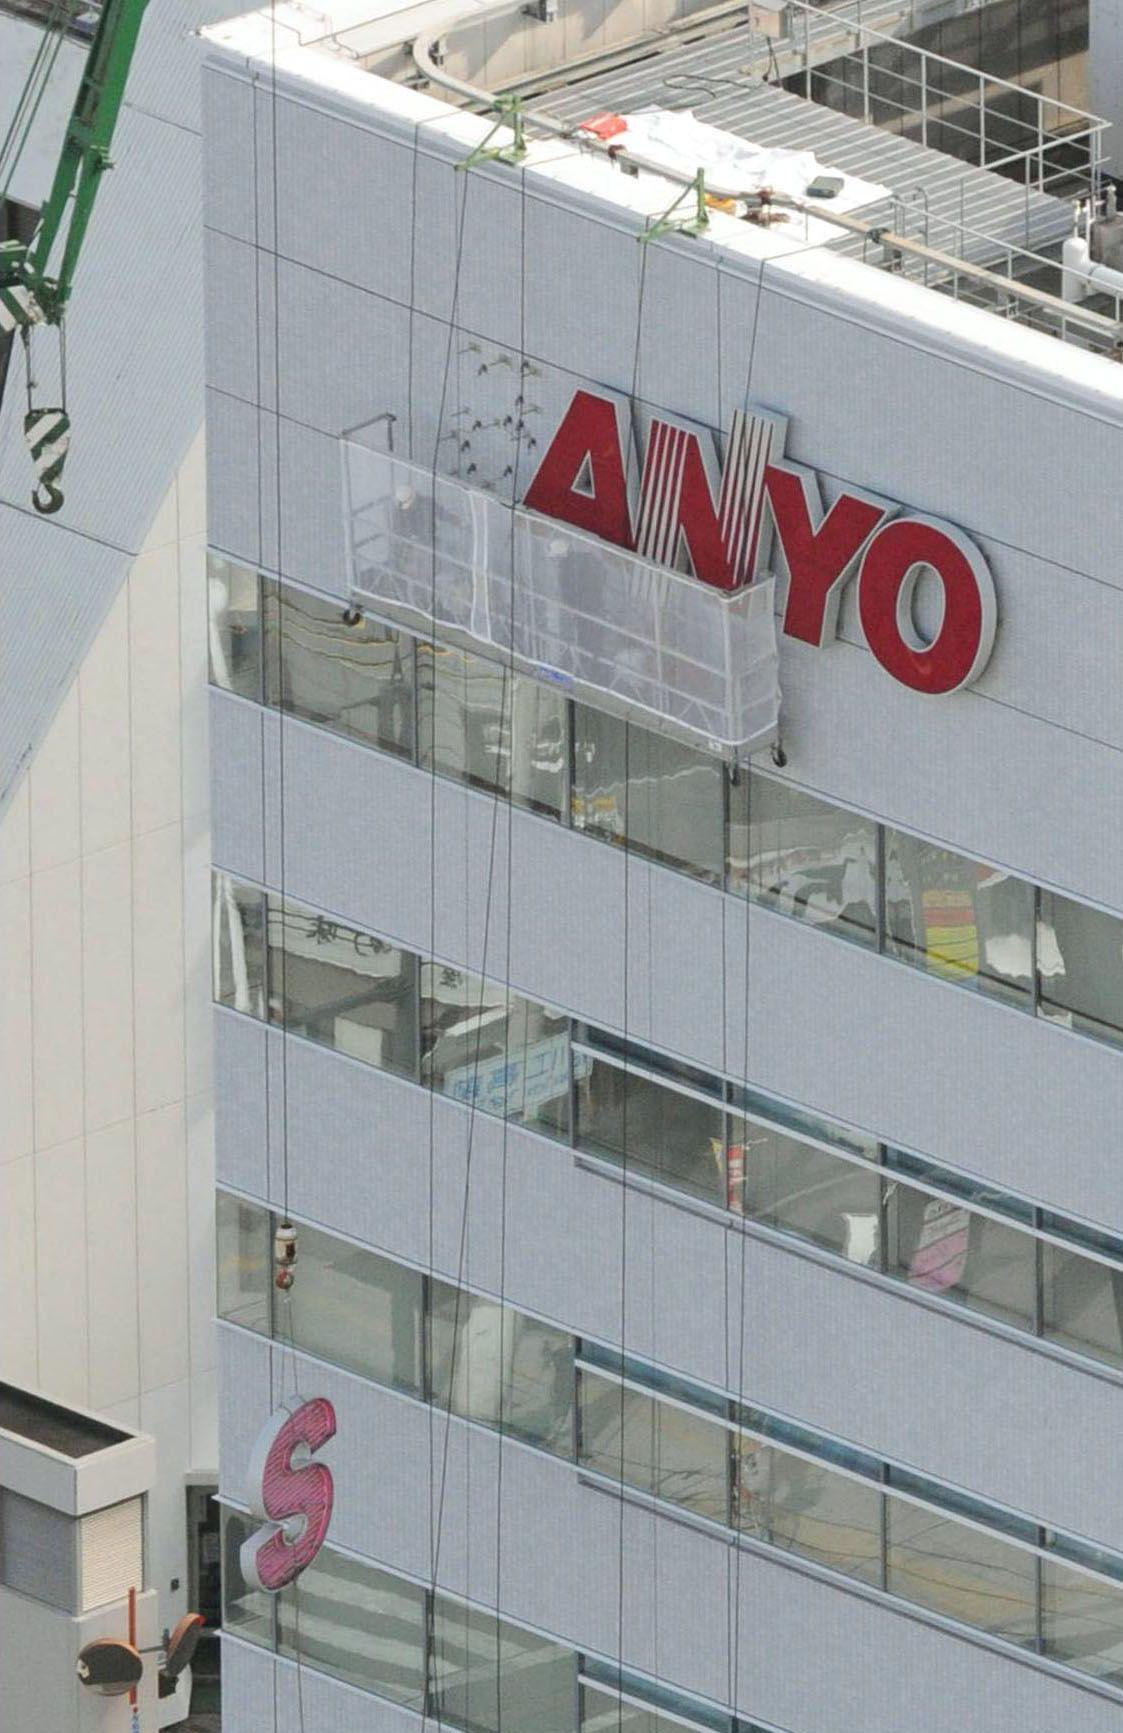 Sanyo Logo - Logo removal marks Sanyo's passing. The Japan Times